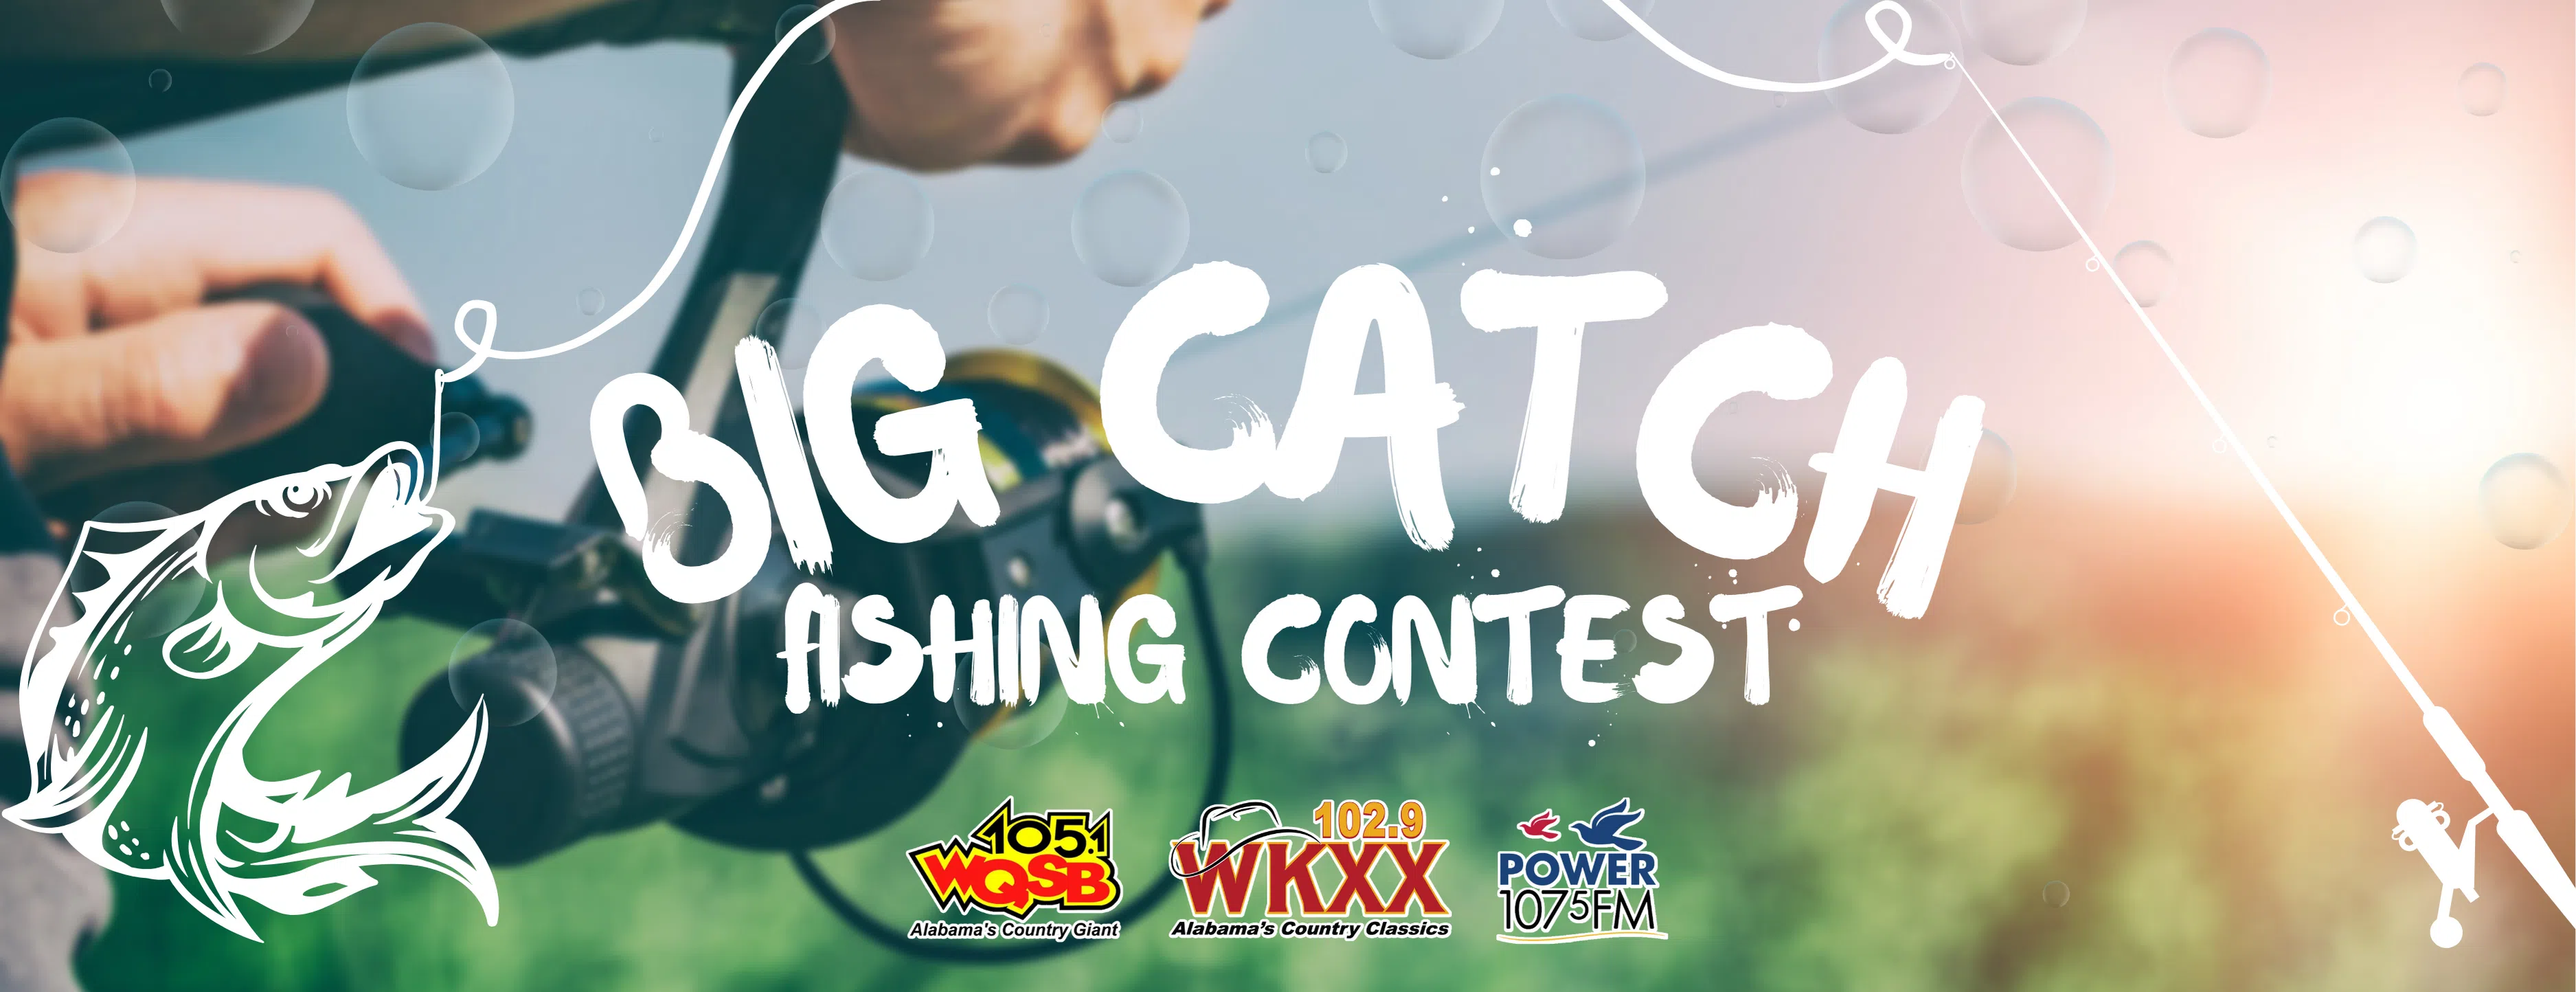 Feature: https://sandmountainbroadcasting.com/big-catch-contest/